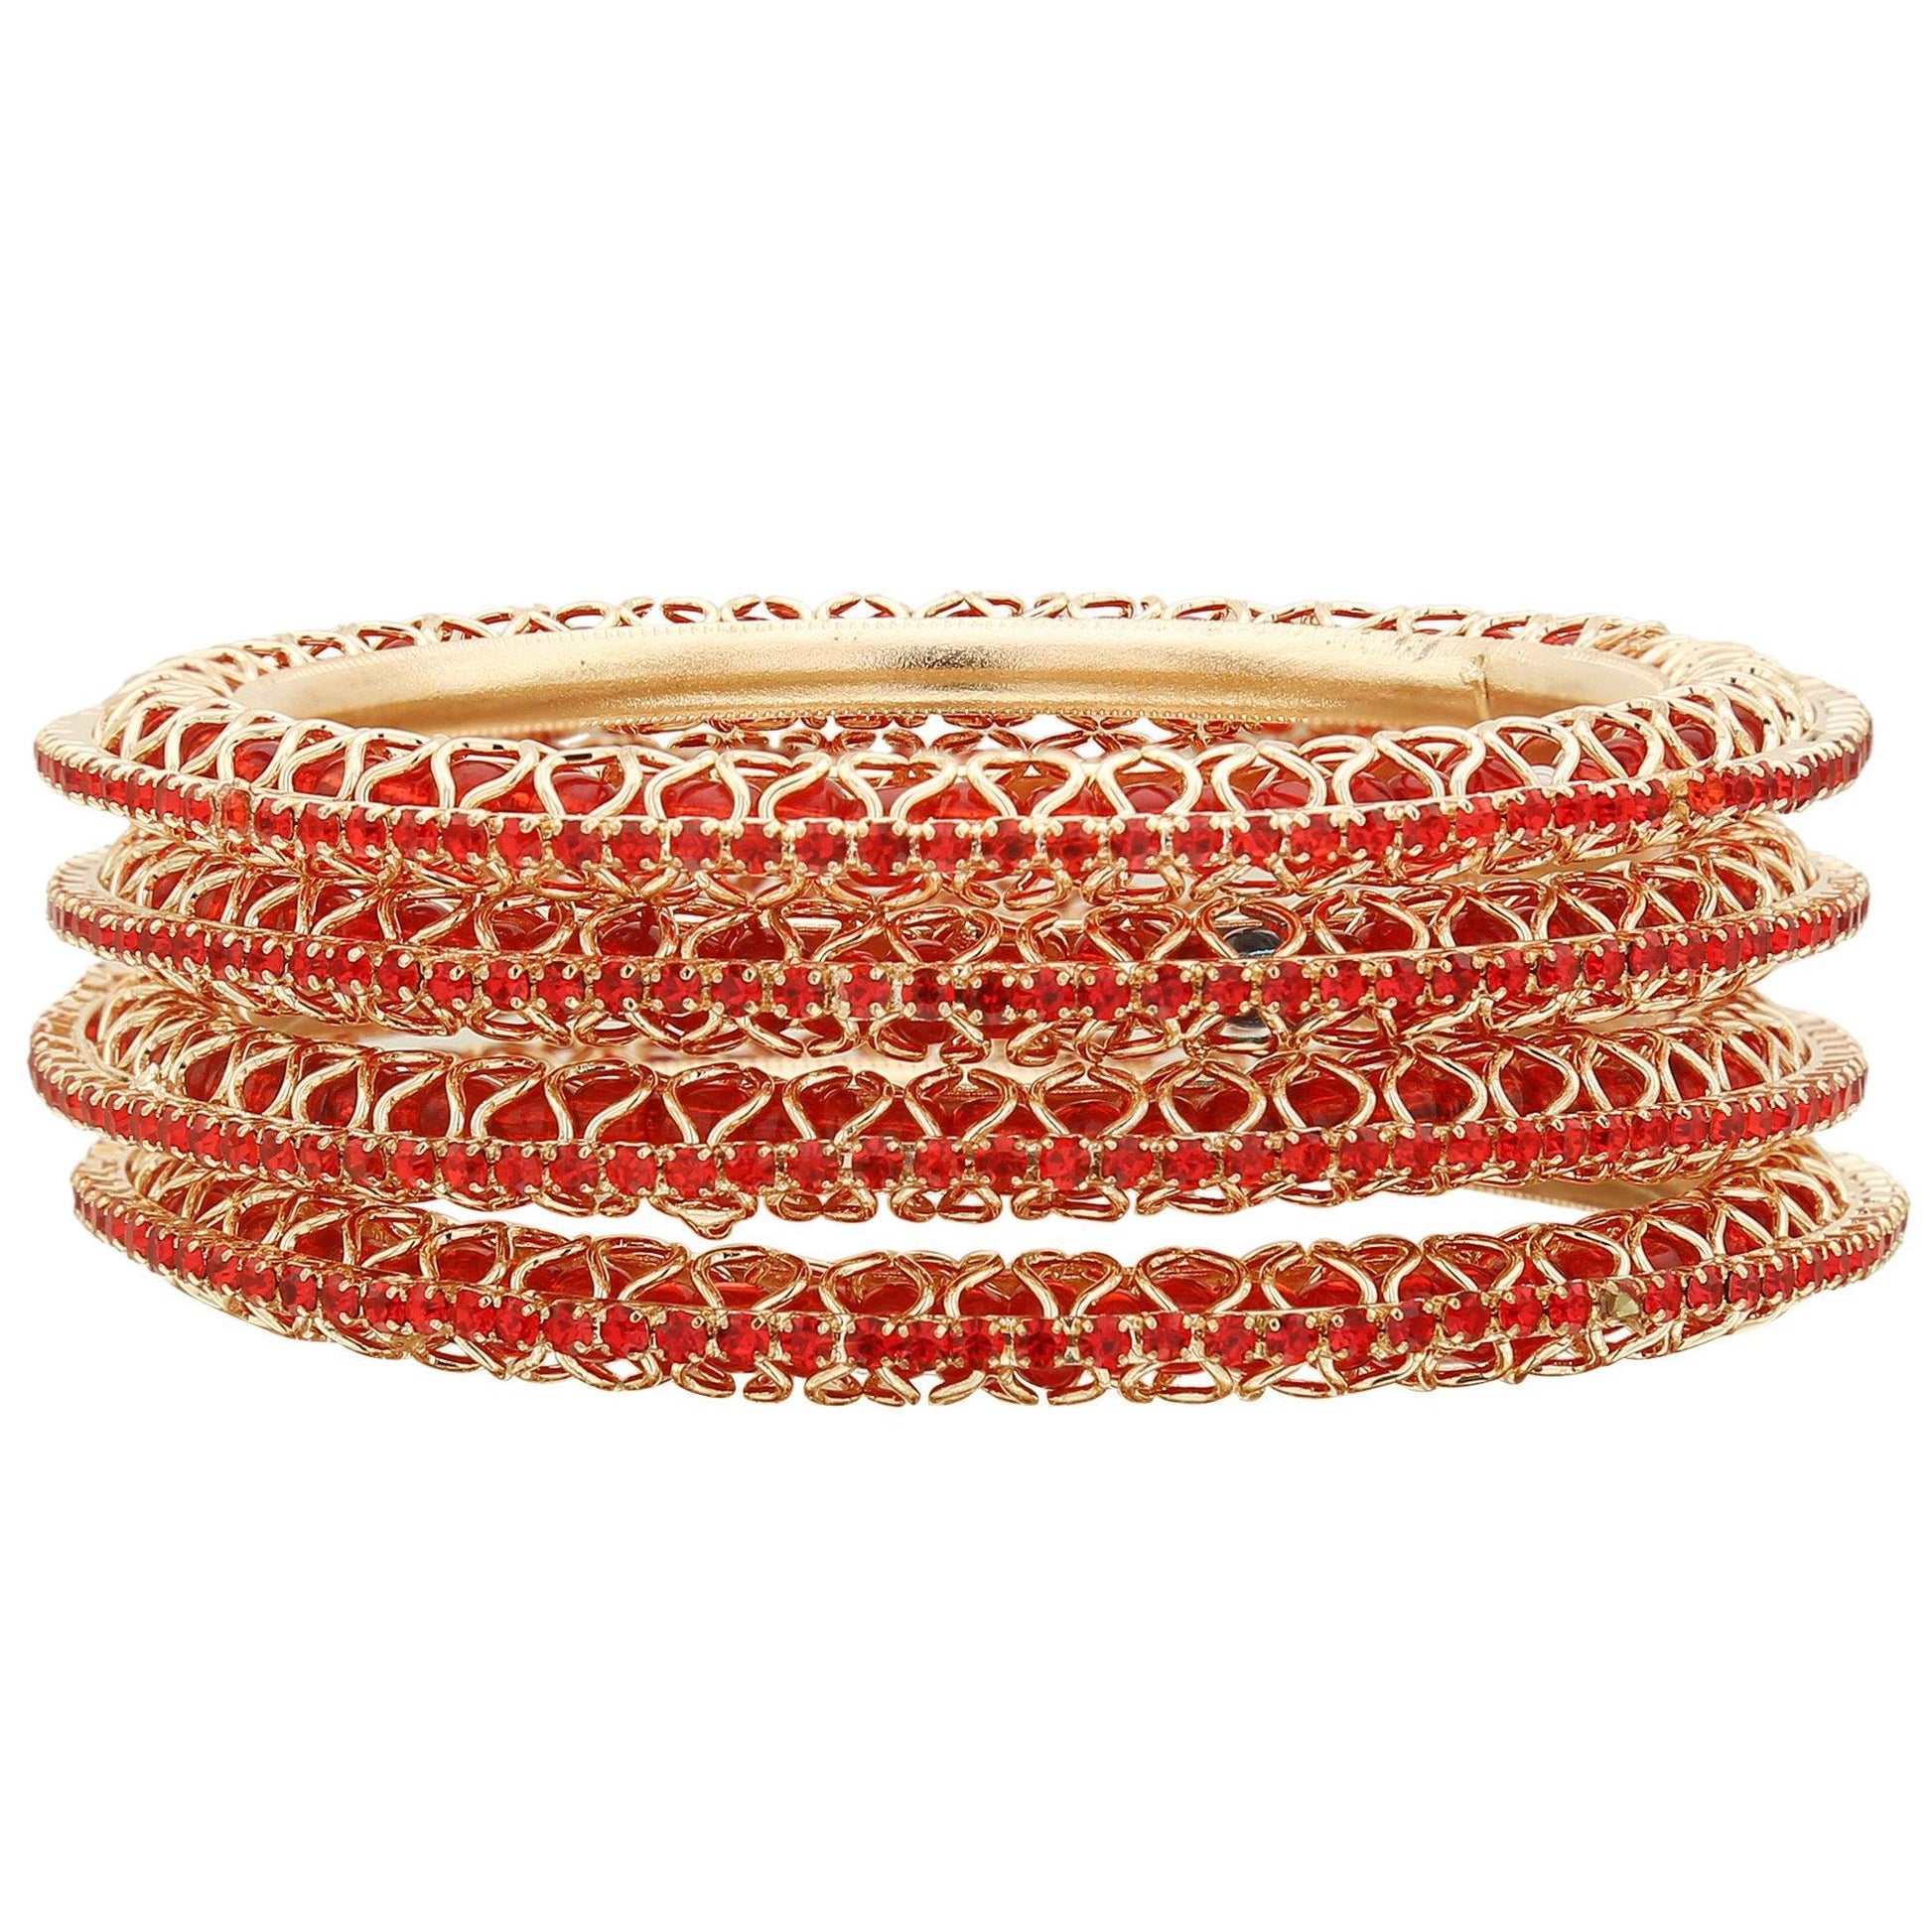 sukriti indian beautiful gold plated royal red bangadi bangles for women & girls - set of 4